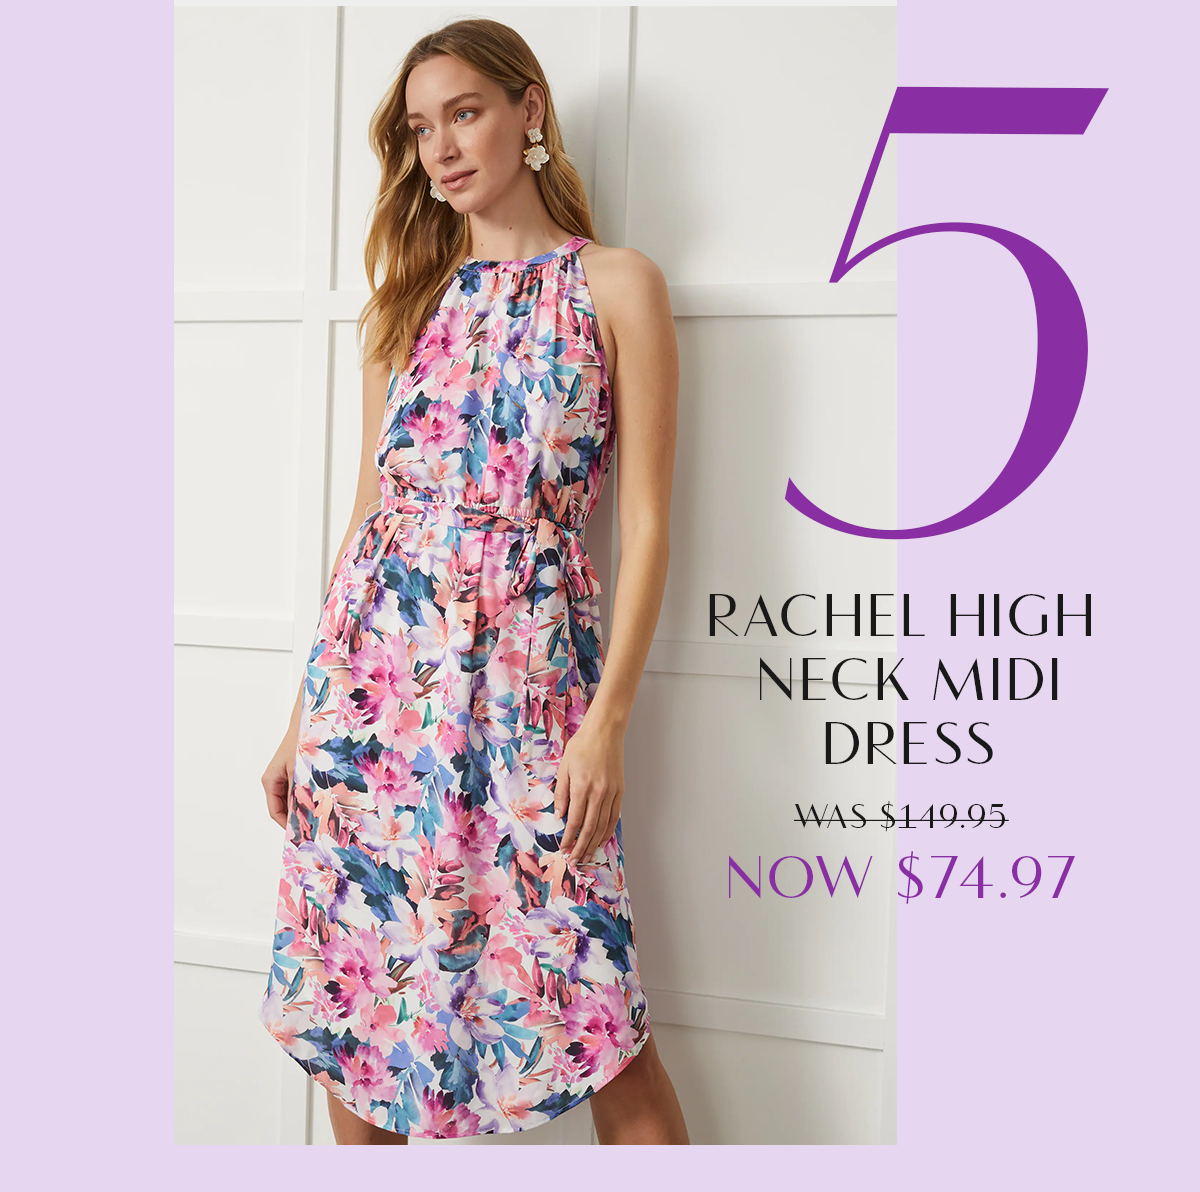 5 Rachel High  Neck Midi  Dress  was $149.95 Now $74.97